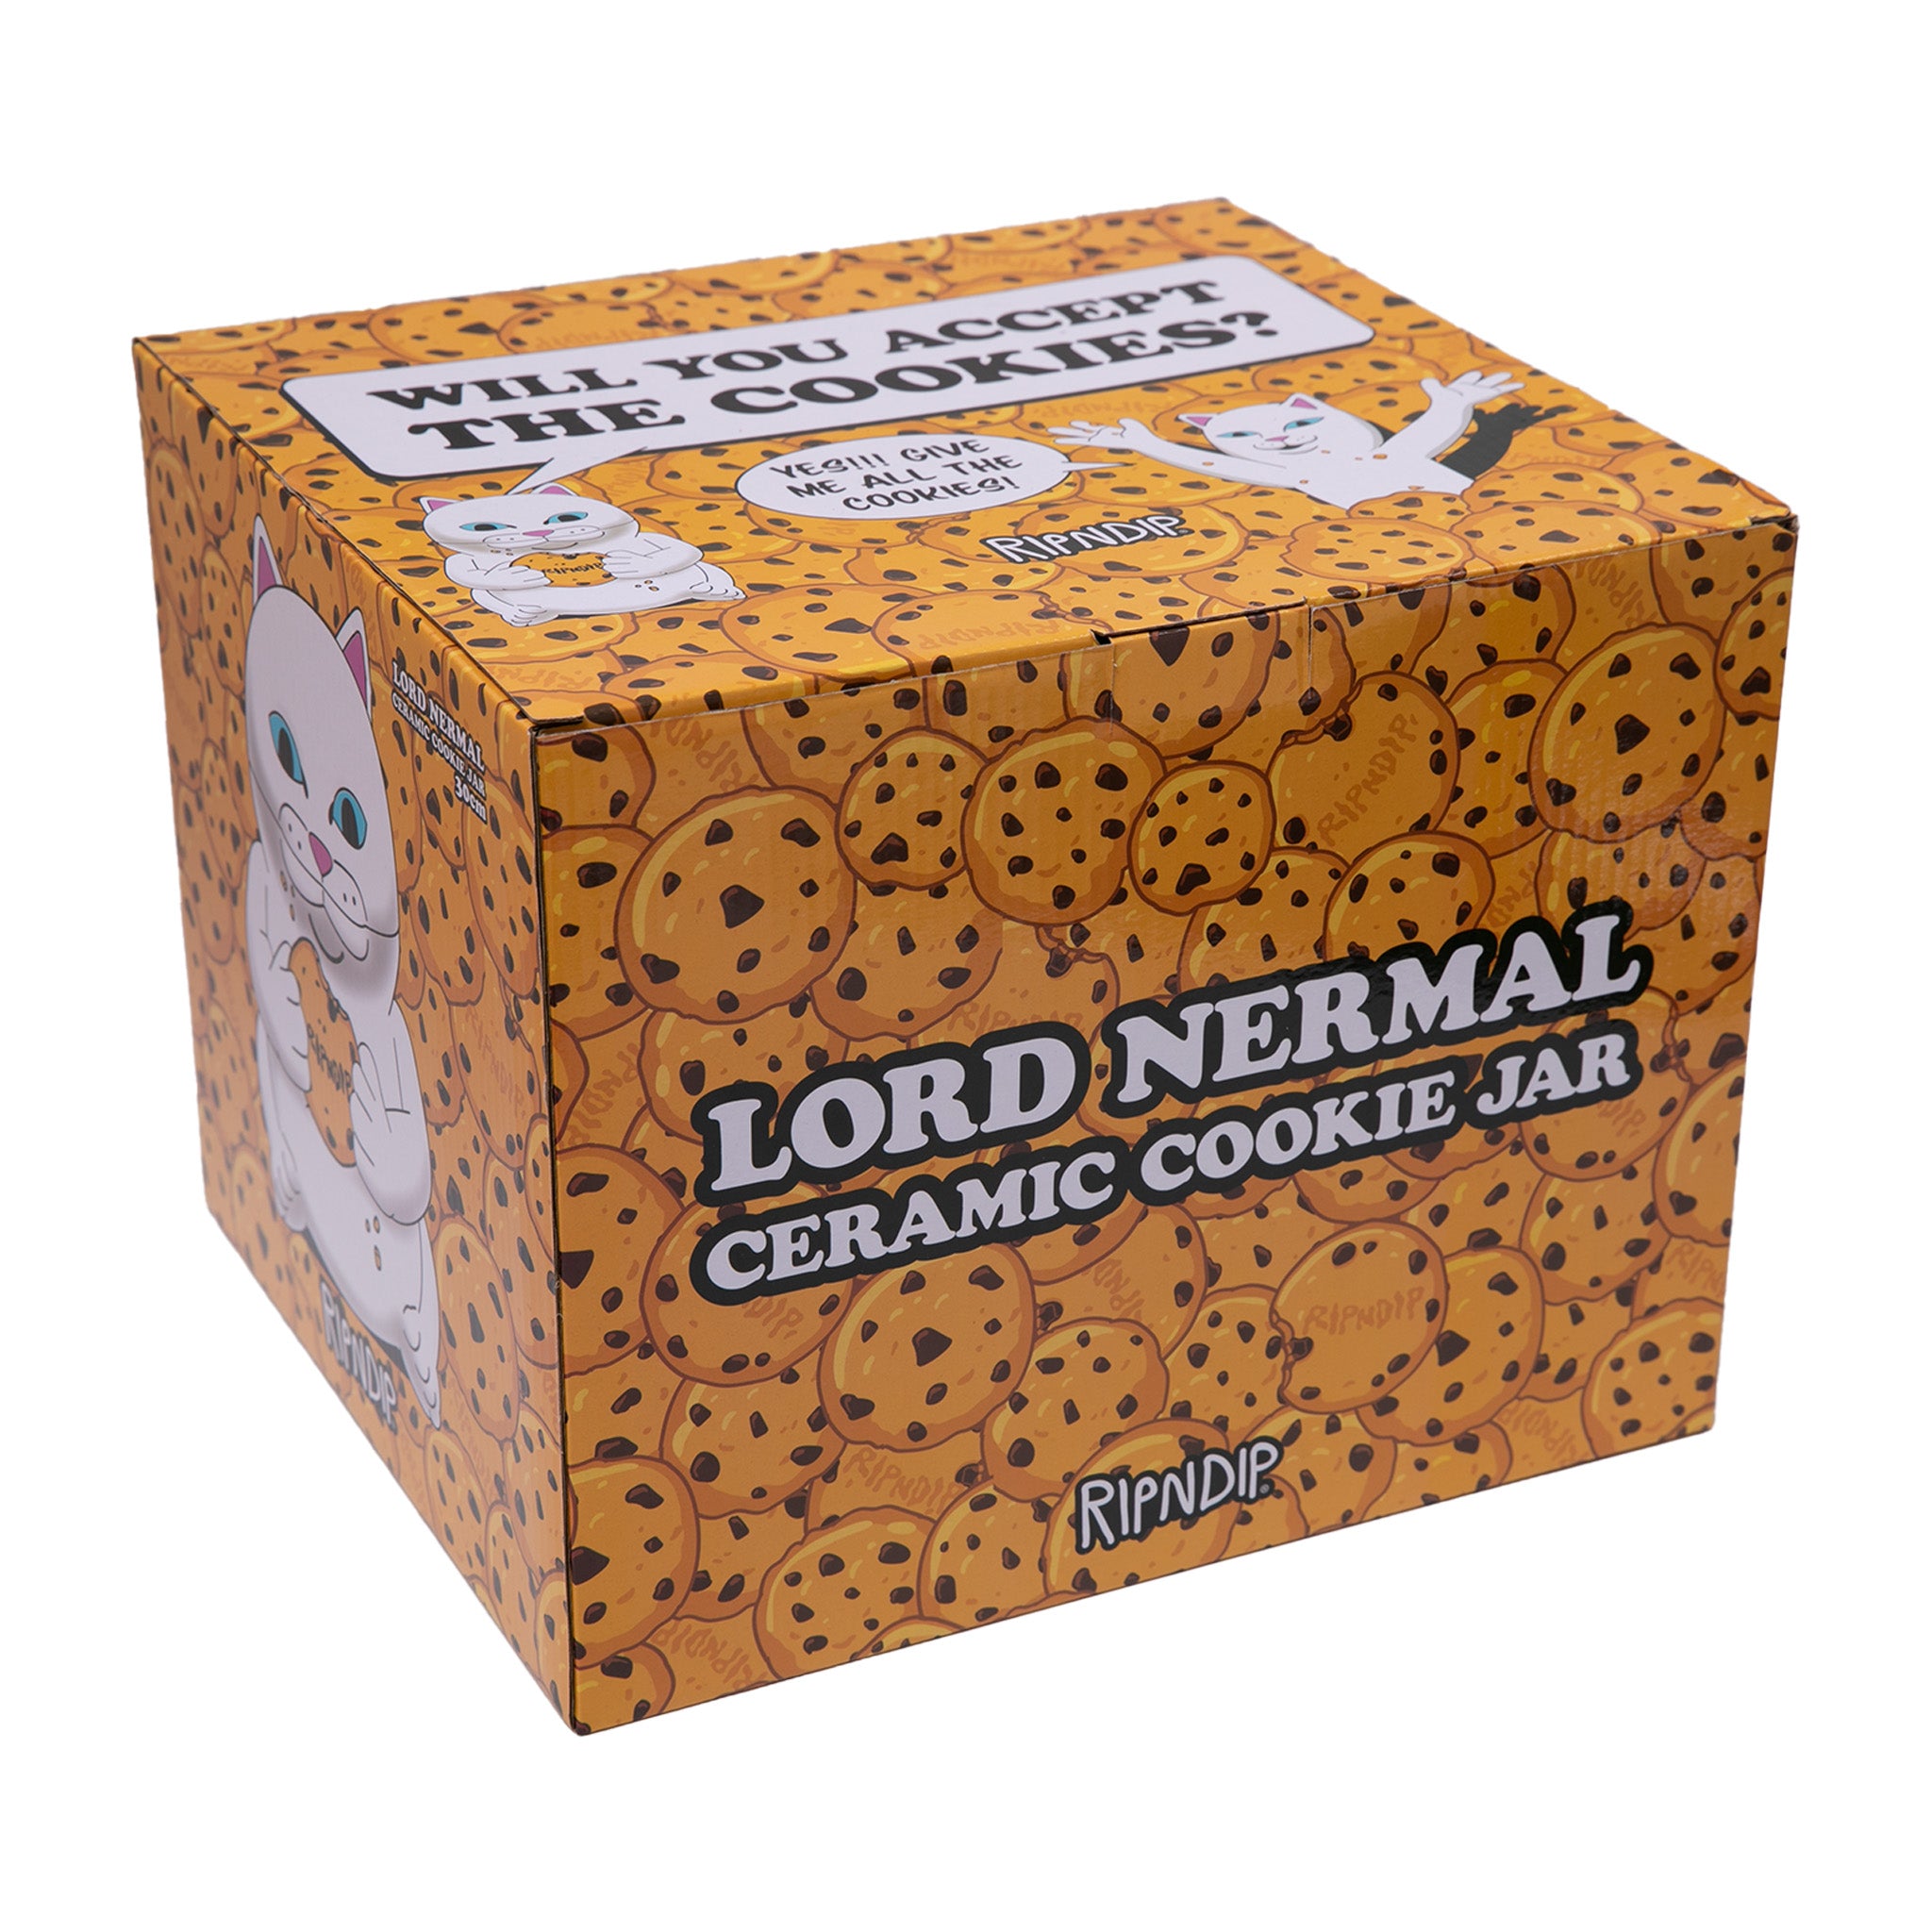 RipNDip Lord Nermal Ceramic Cookie Jar